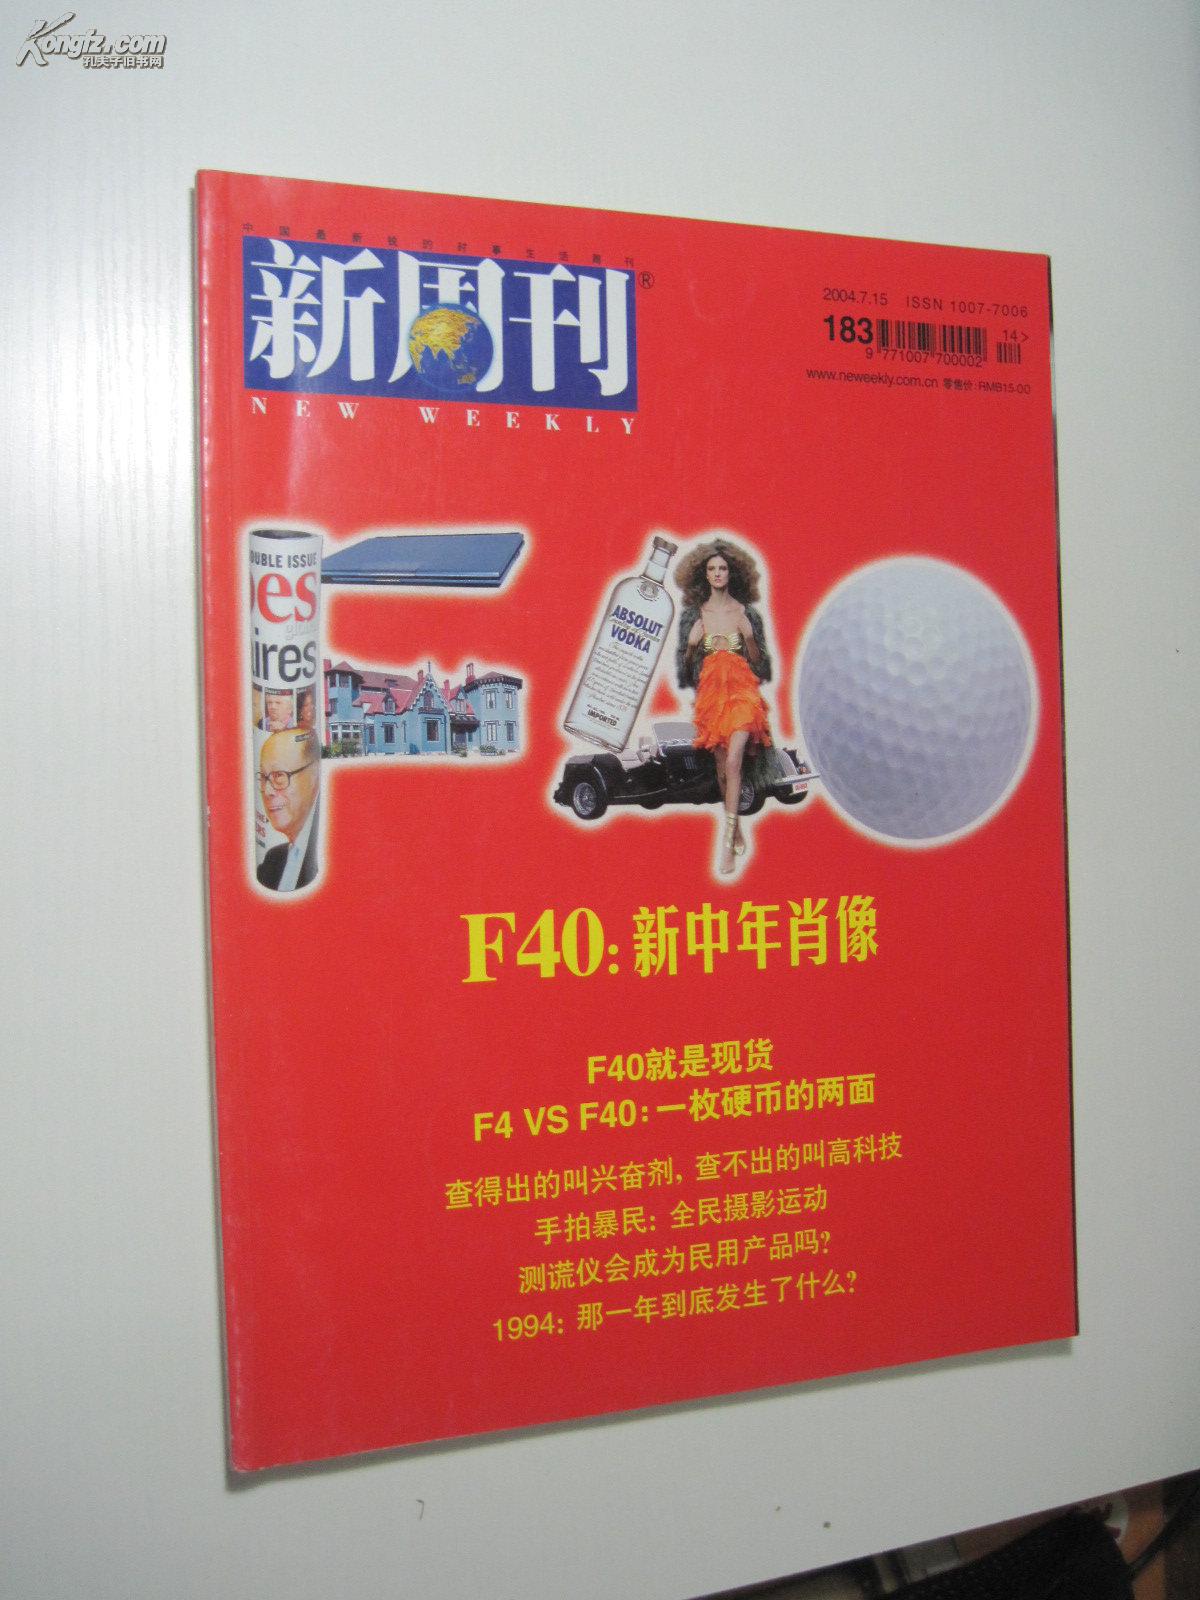 新周刊 2004年第14期